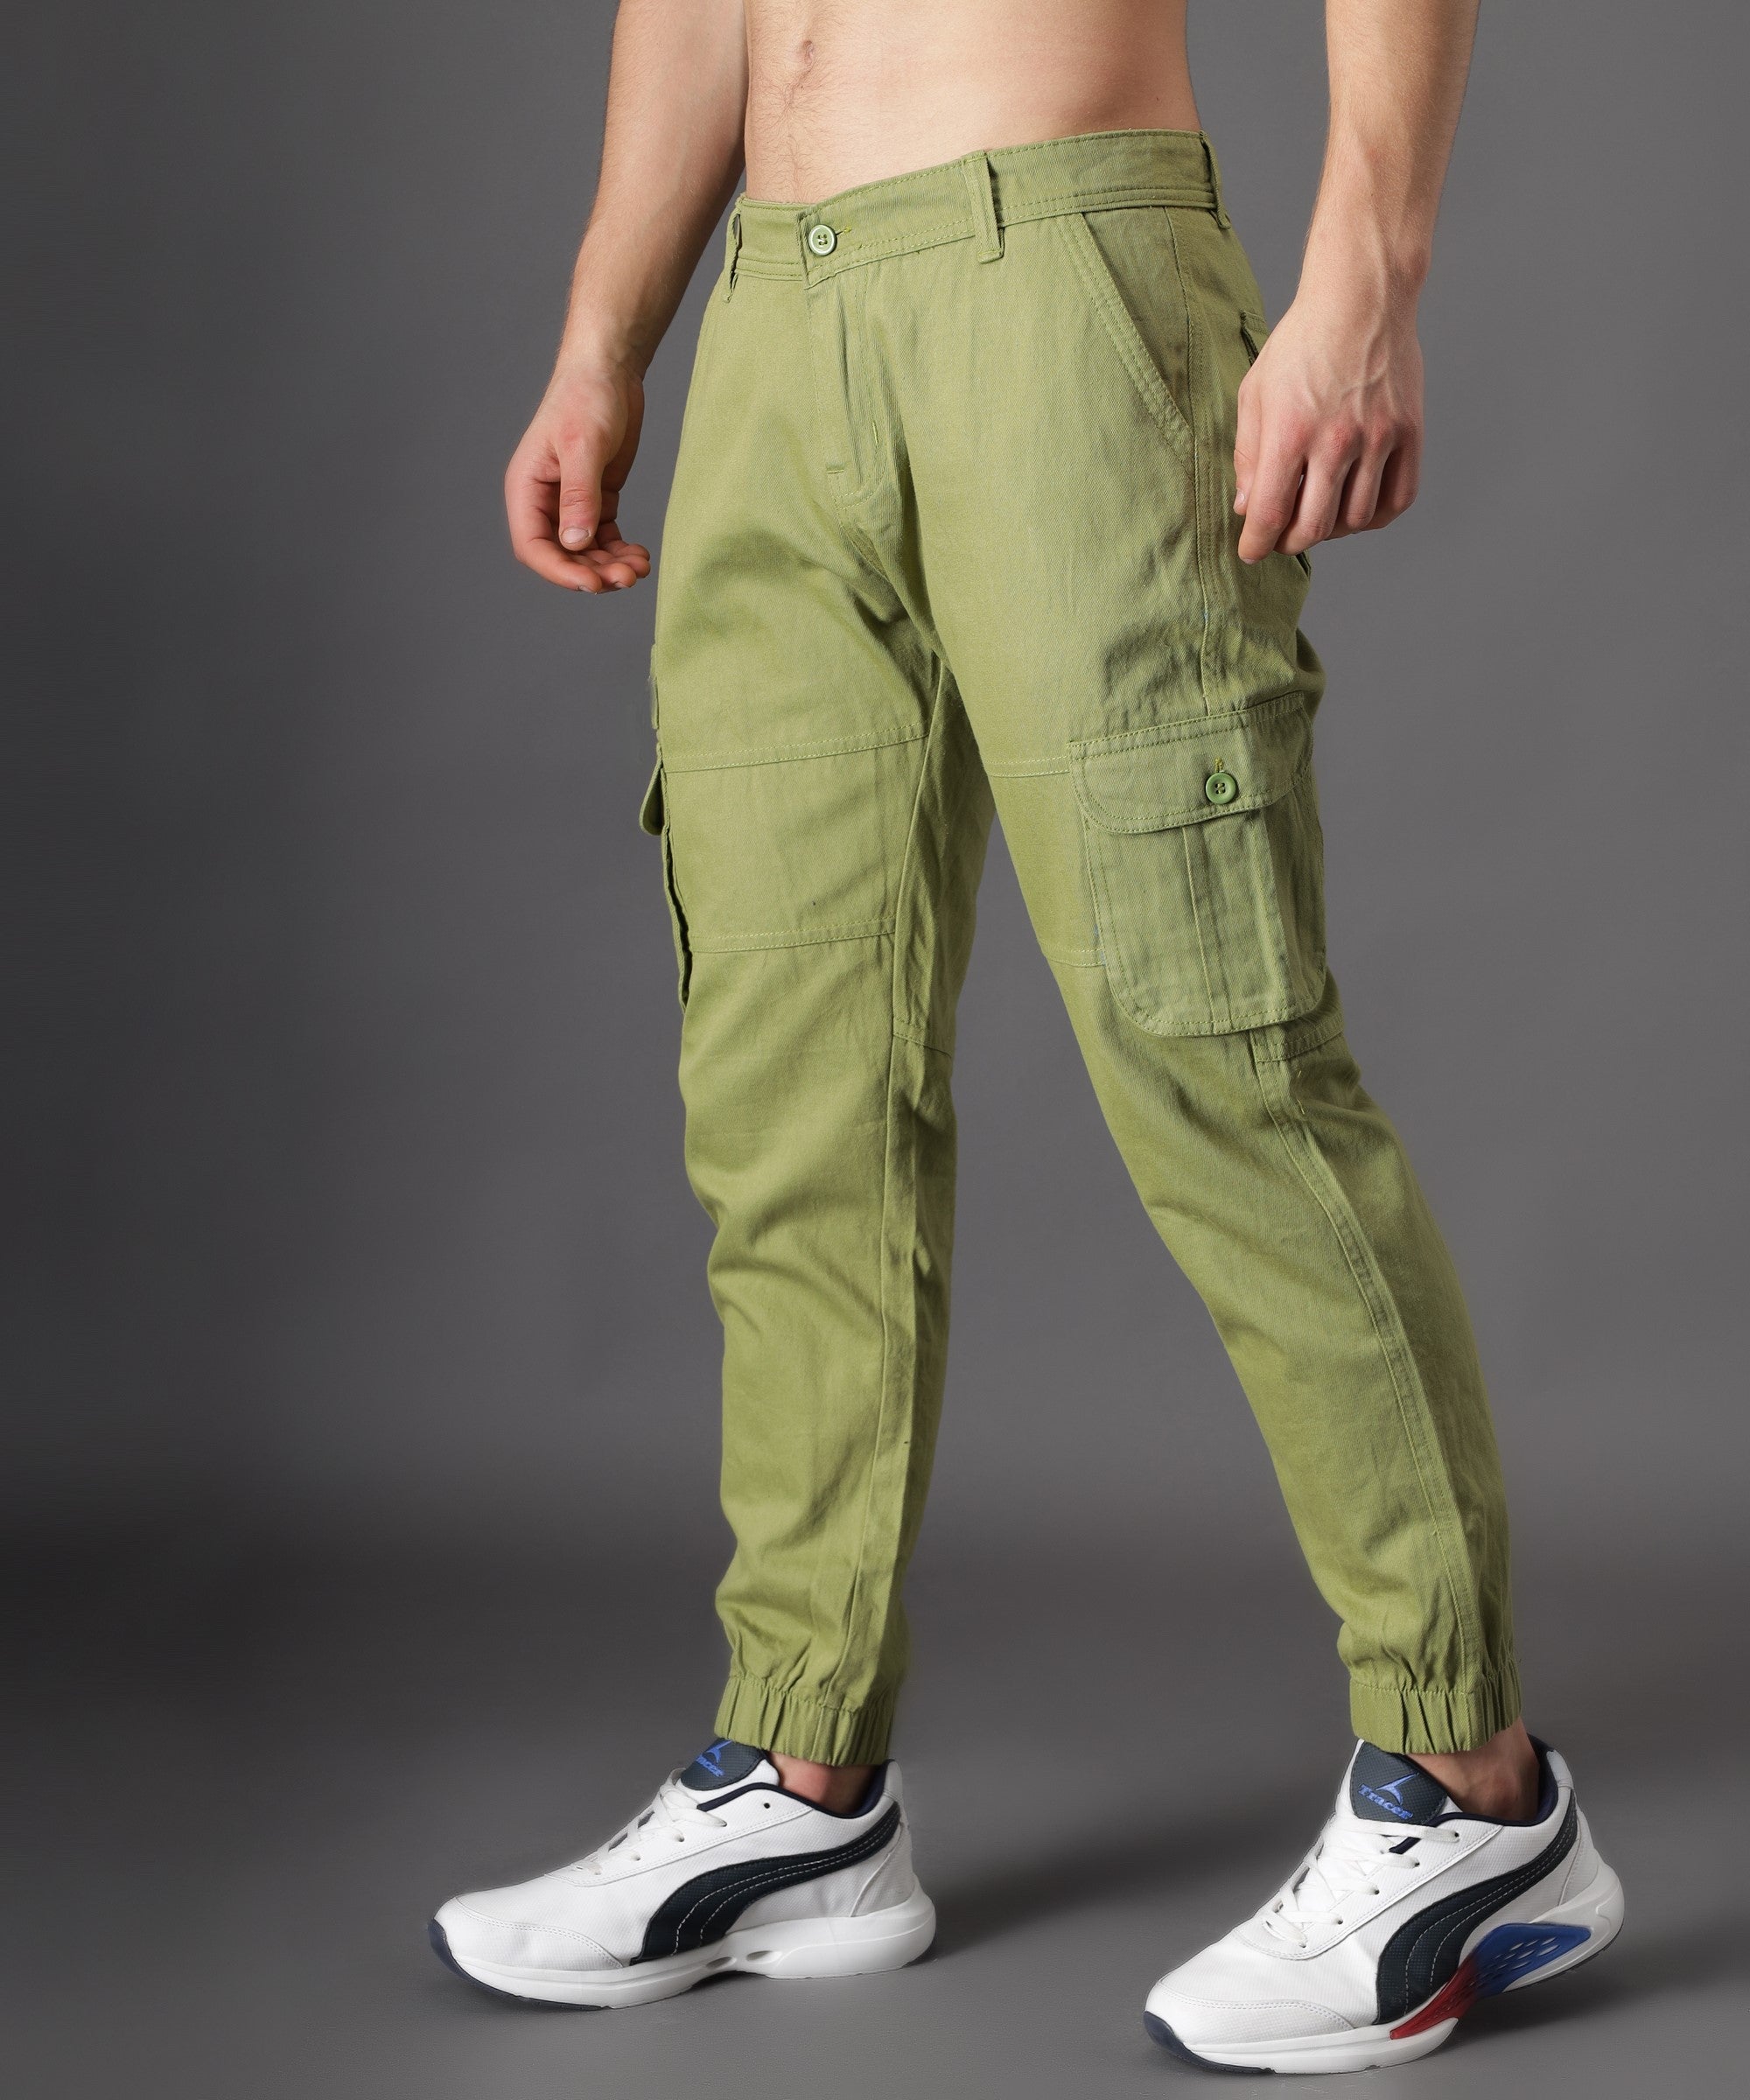 Regular Fit Linen-blend Cargo Pants - Dark khaki green - Men | H&M US